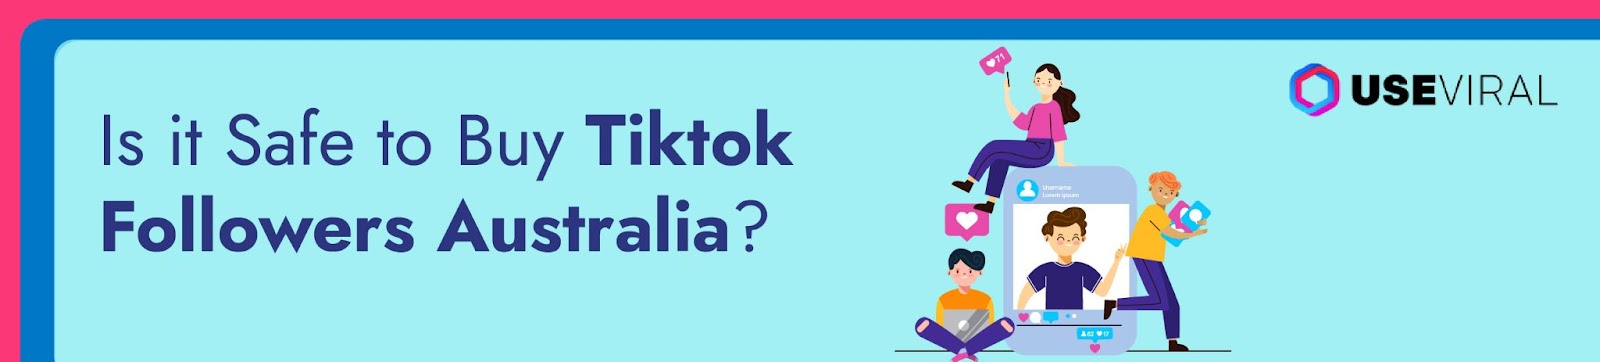 Is it Safe to Buy Tiktok Followers Australia?